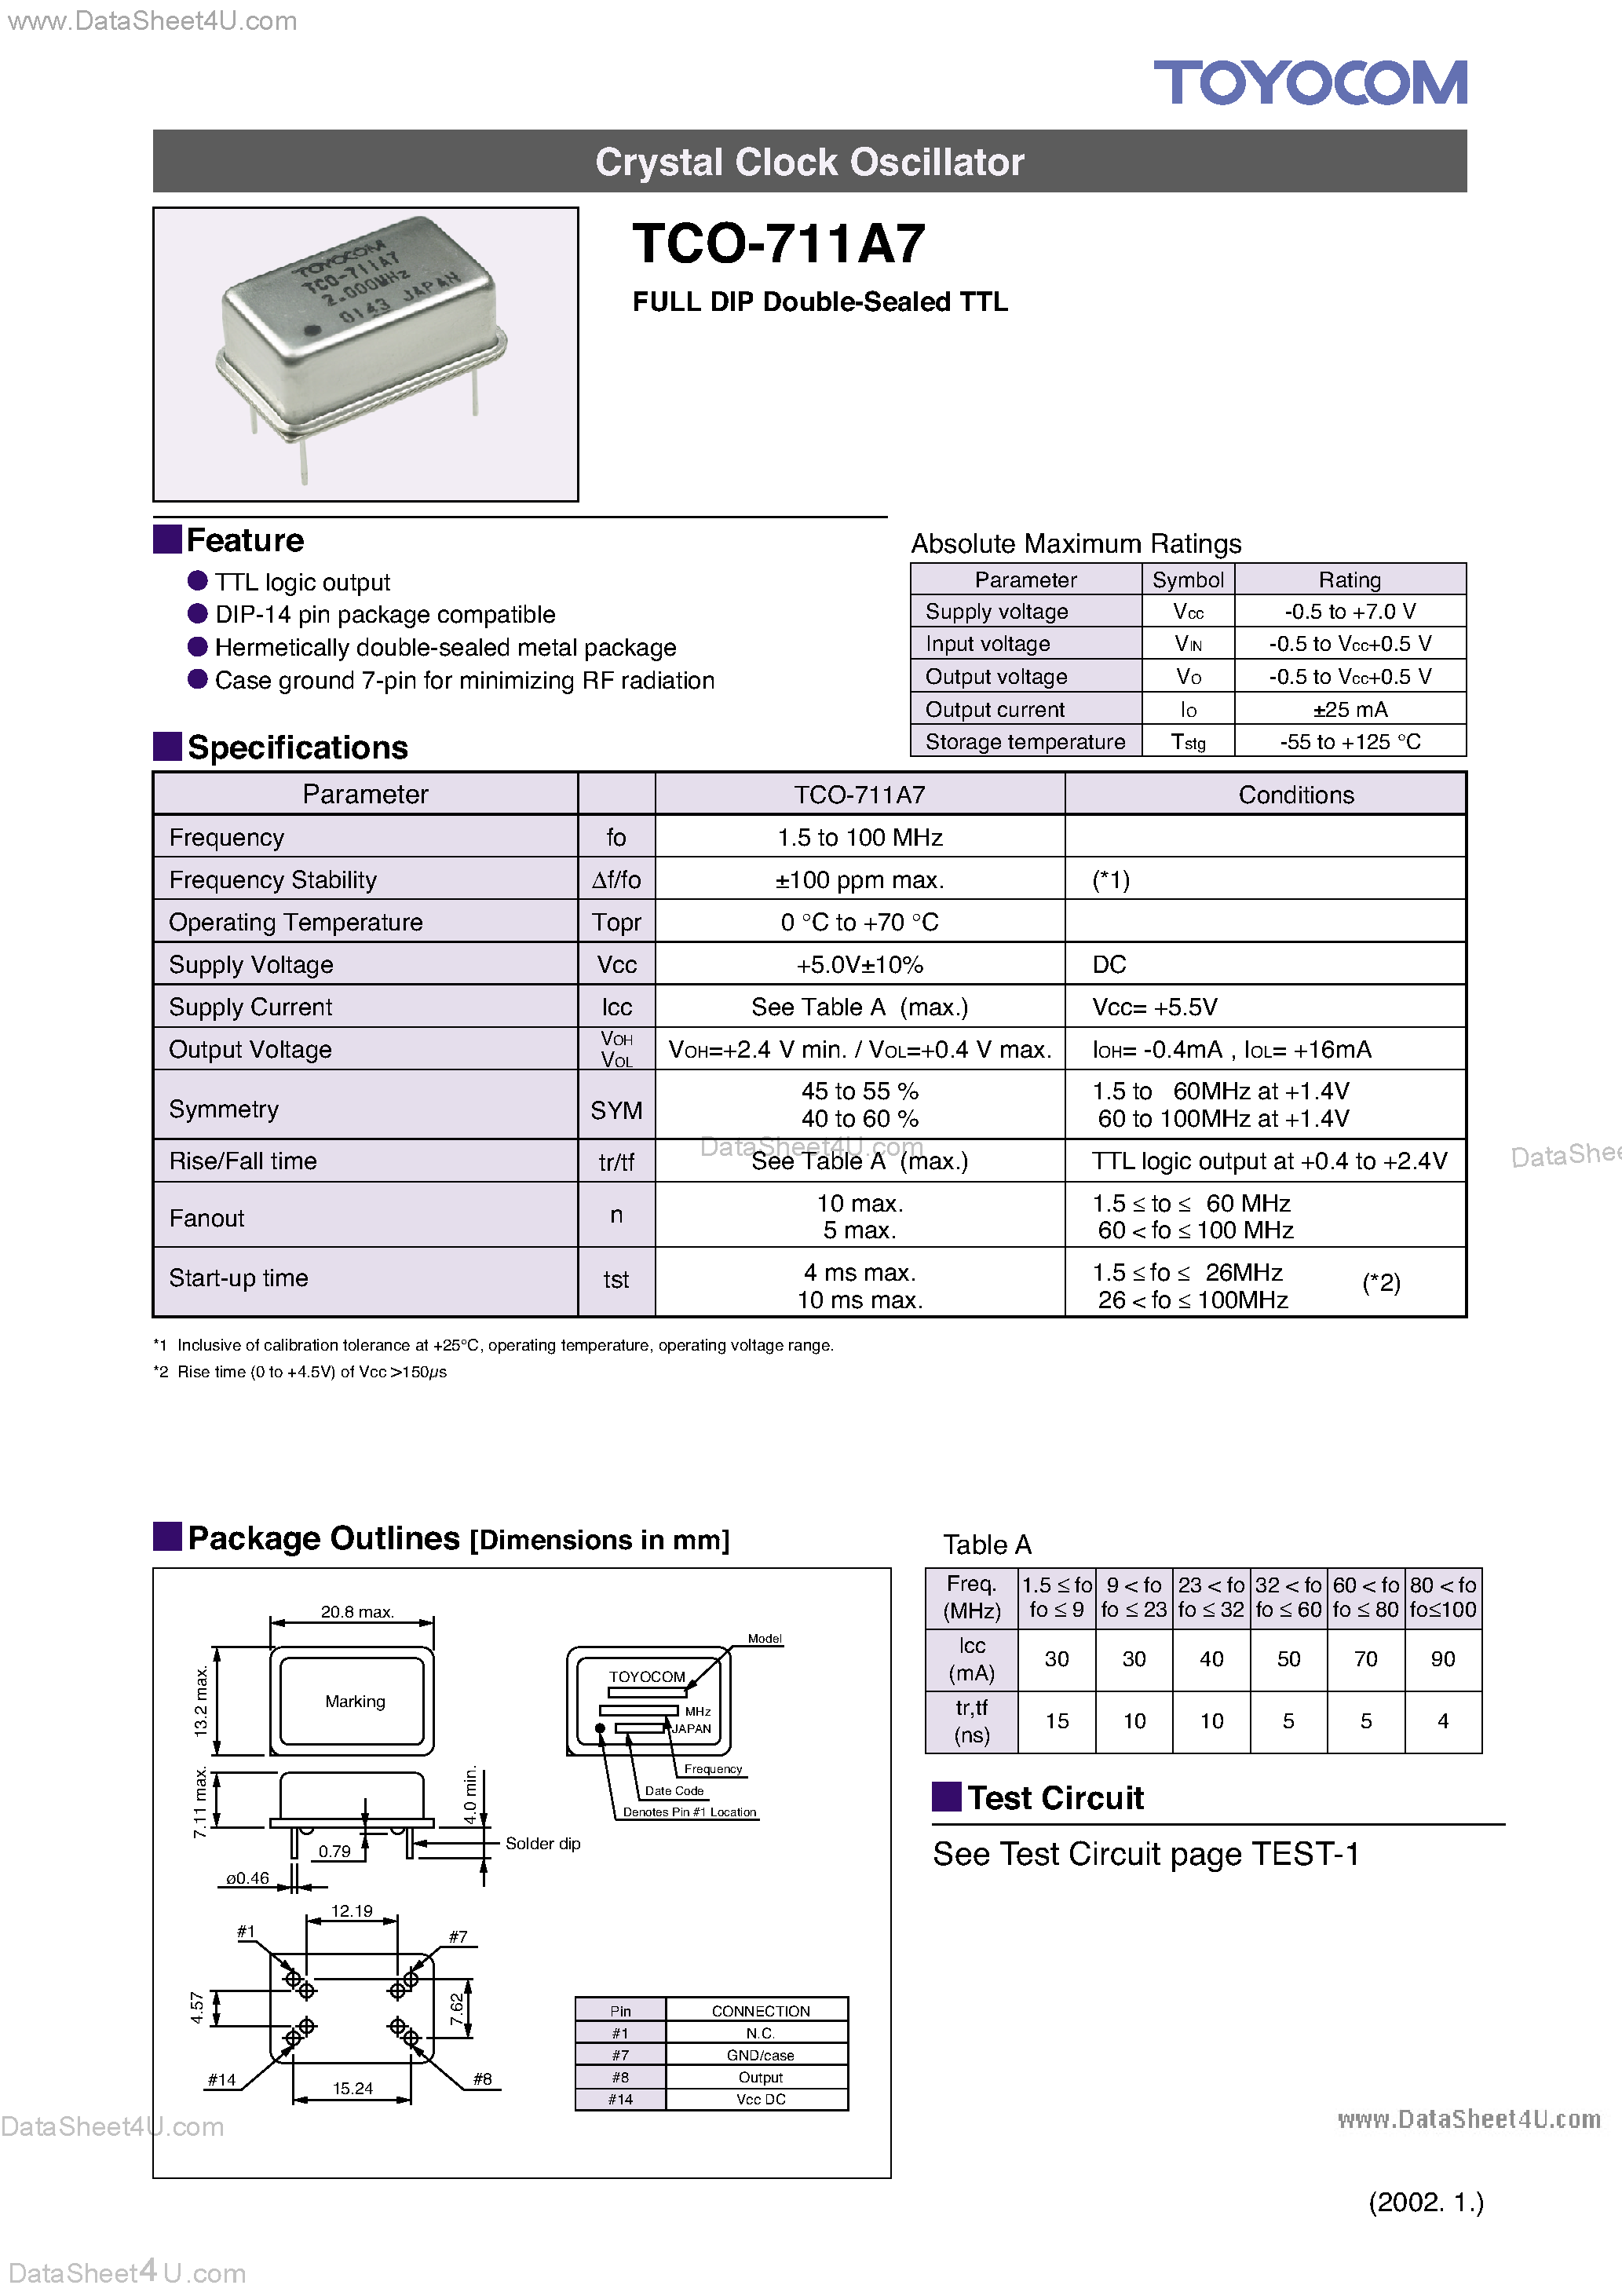 Datasheet TCO-711A7 - Full DIP Double Sealed TTL Crystal Clock Oscillator page 1